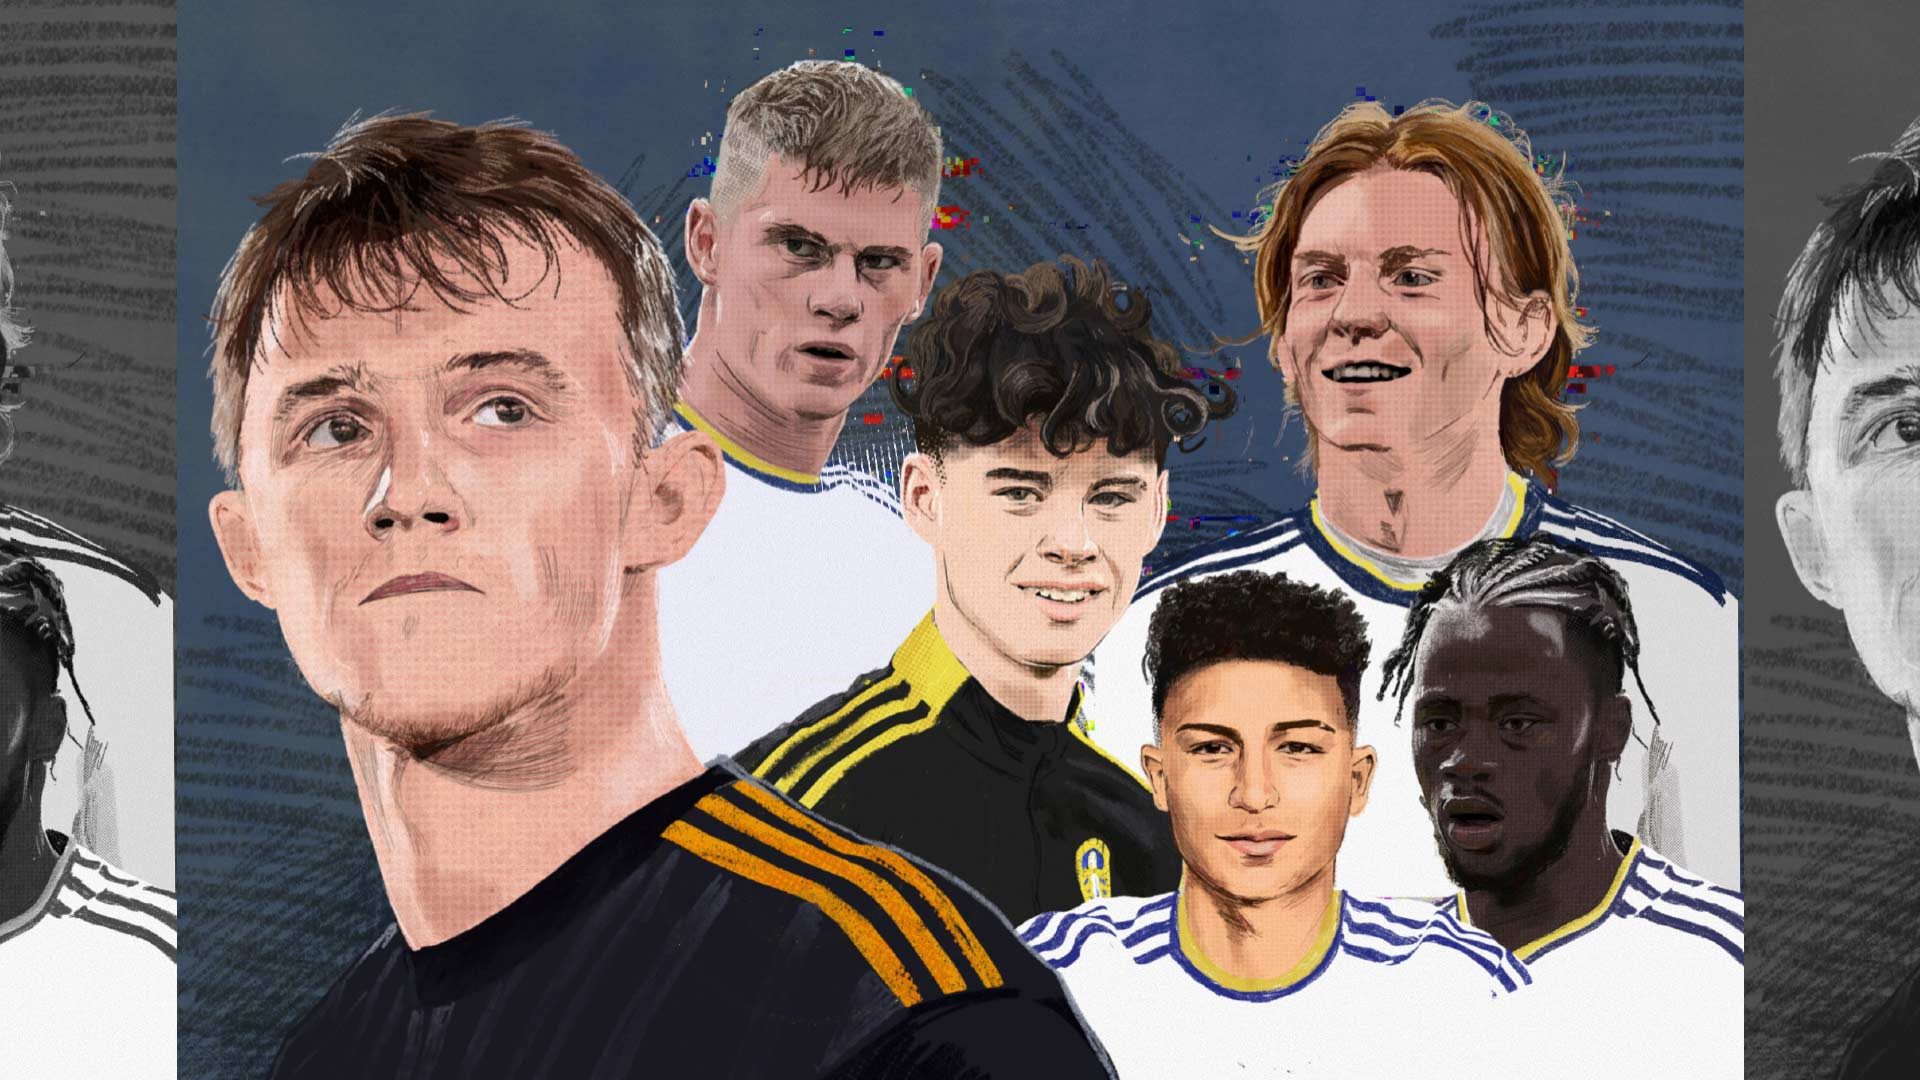 An illustration of our Leeds Under-21 saviours Joffy Gelhardt, Charlie Cresswell, Archie Gray, Mateo Joseph, Darko Gyabi, and the Merseyside Messi Sean McGurk